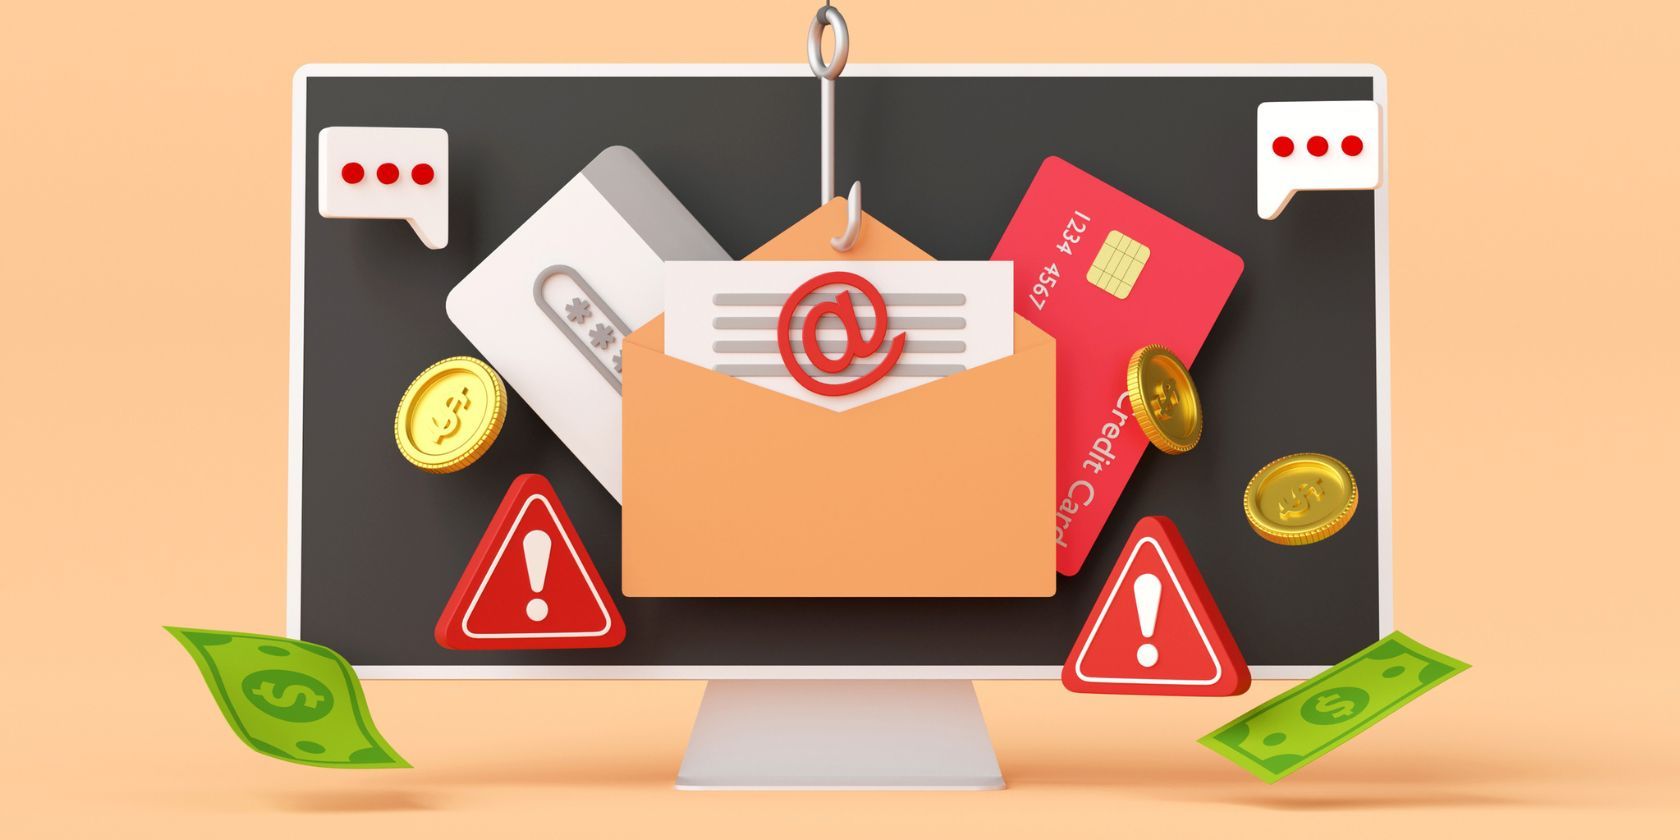 digital graphic of phishing hook, dollars, and alert icons surrounding computer screen